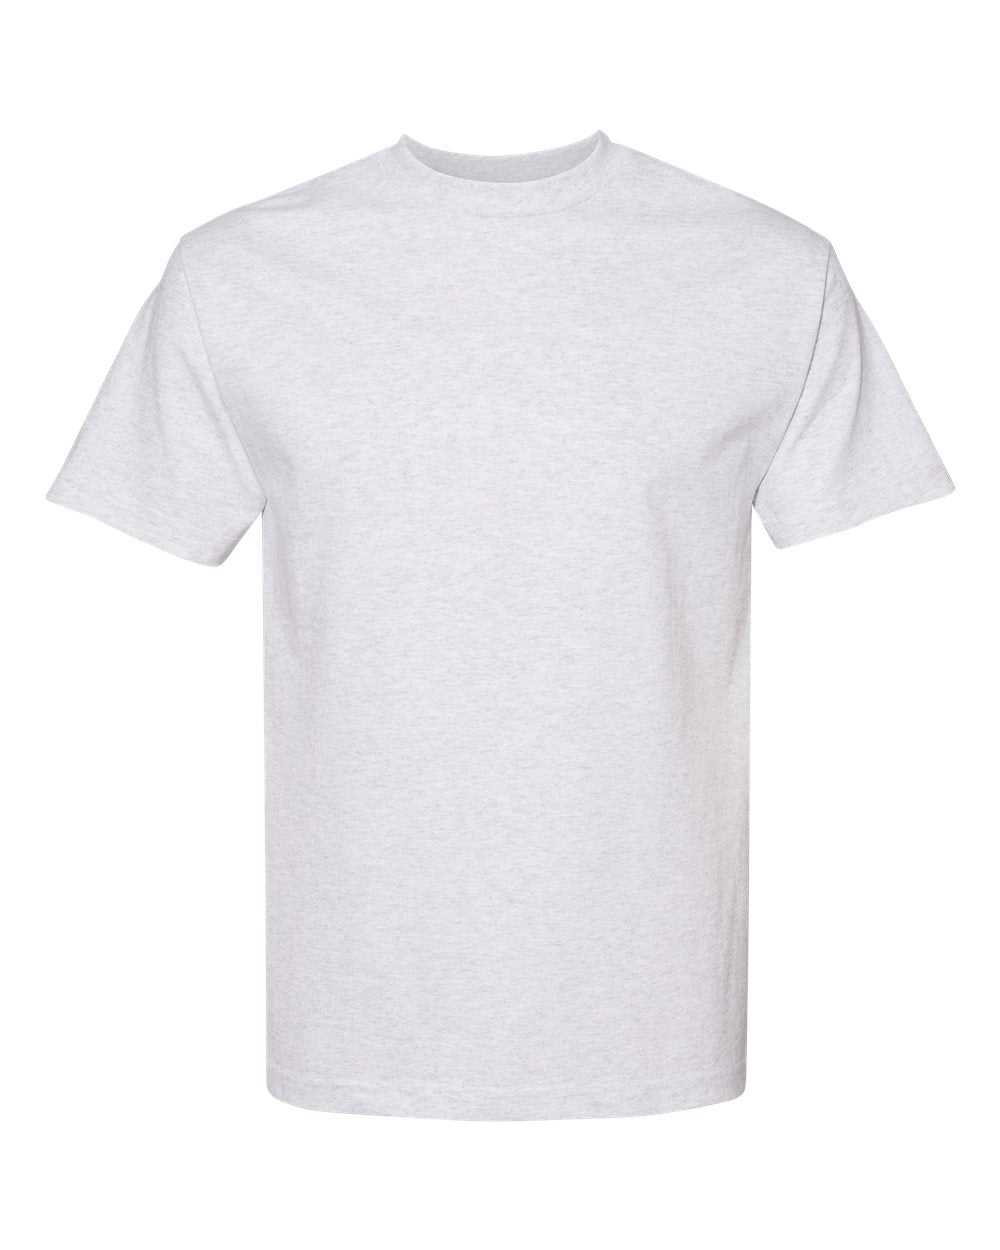 American Apparel 1301 Unisex Heavyweight Cotton T-Shirt - Ash - HIT a Double